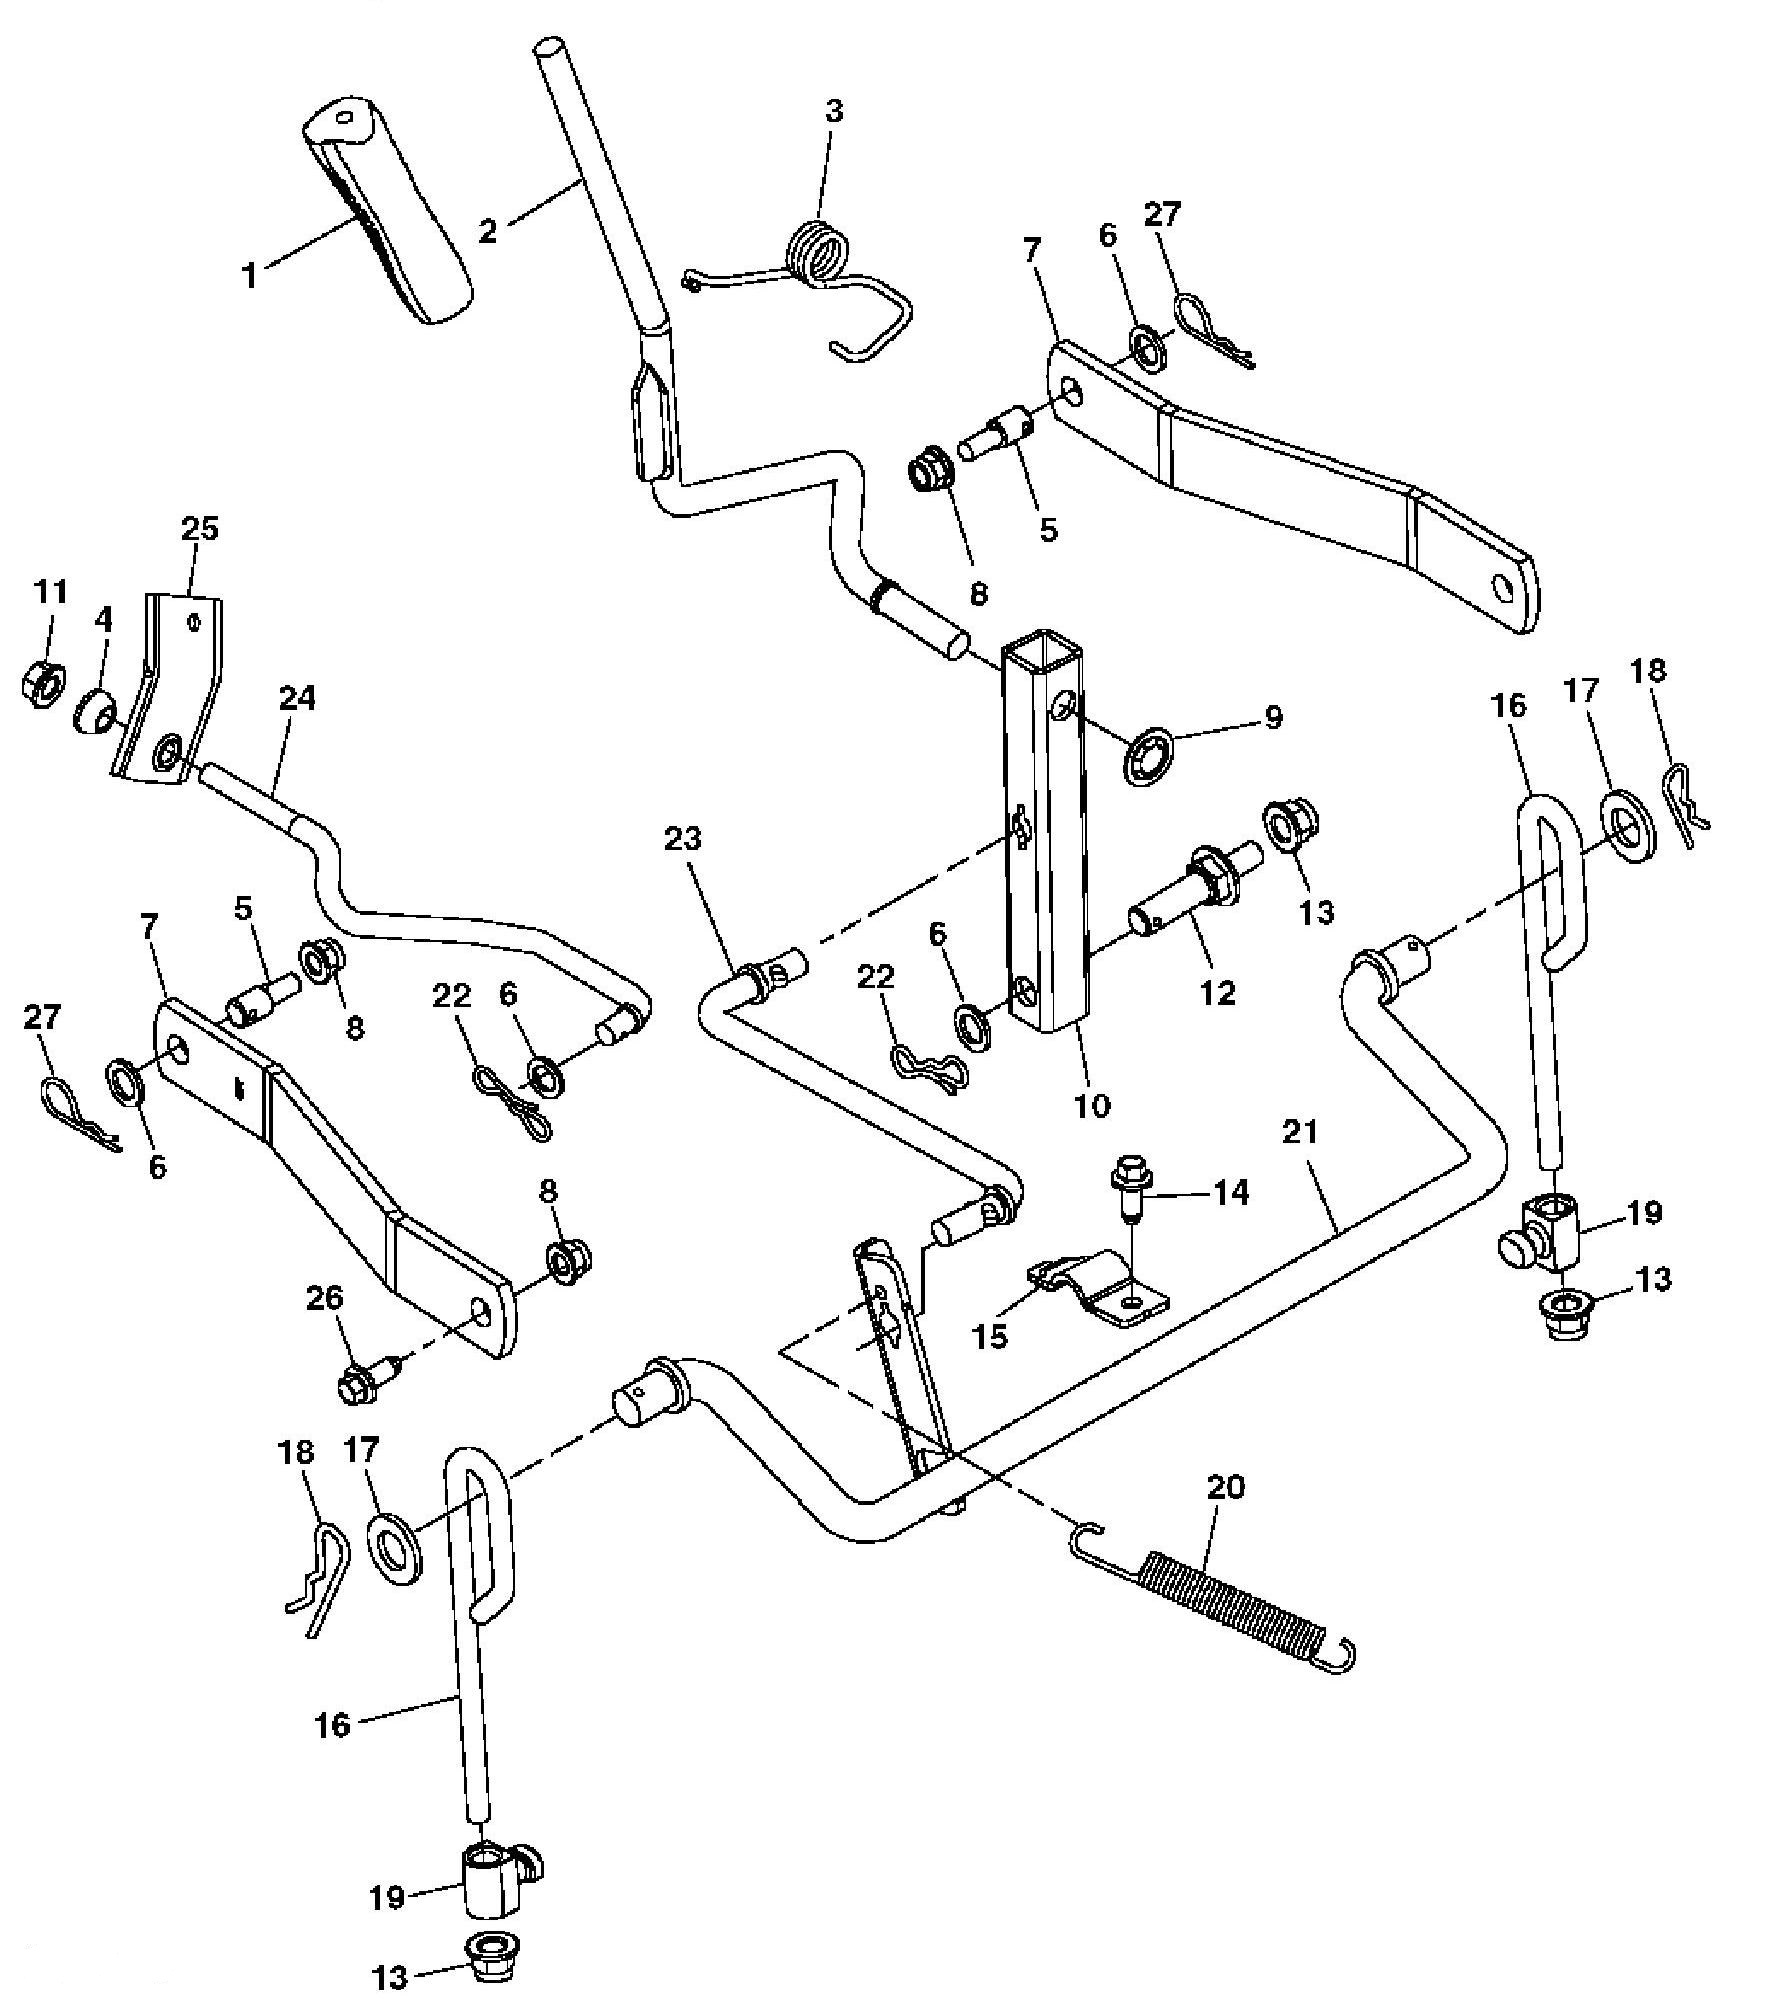 John Deere L120 Clutch Wiring Diagram